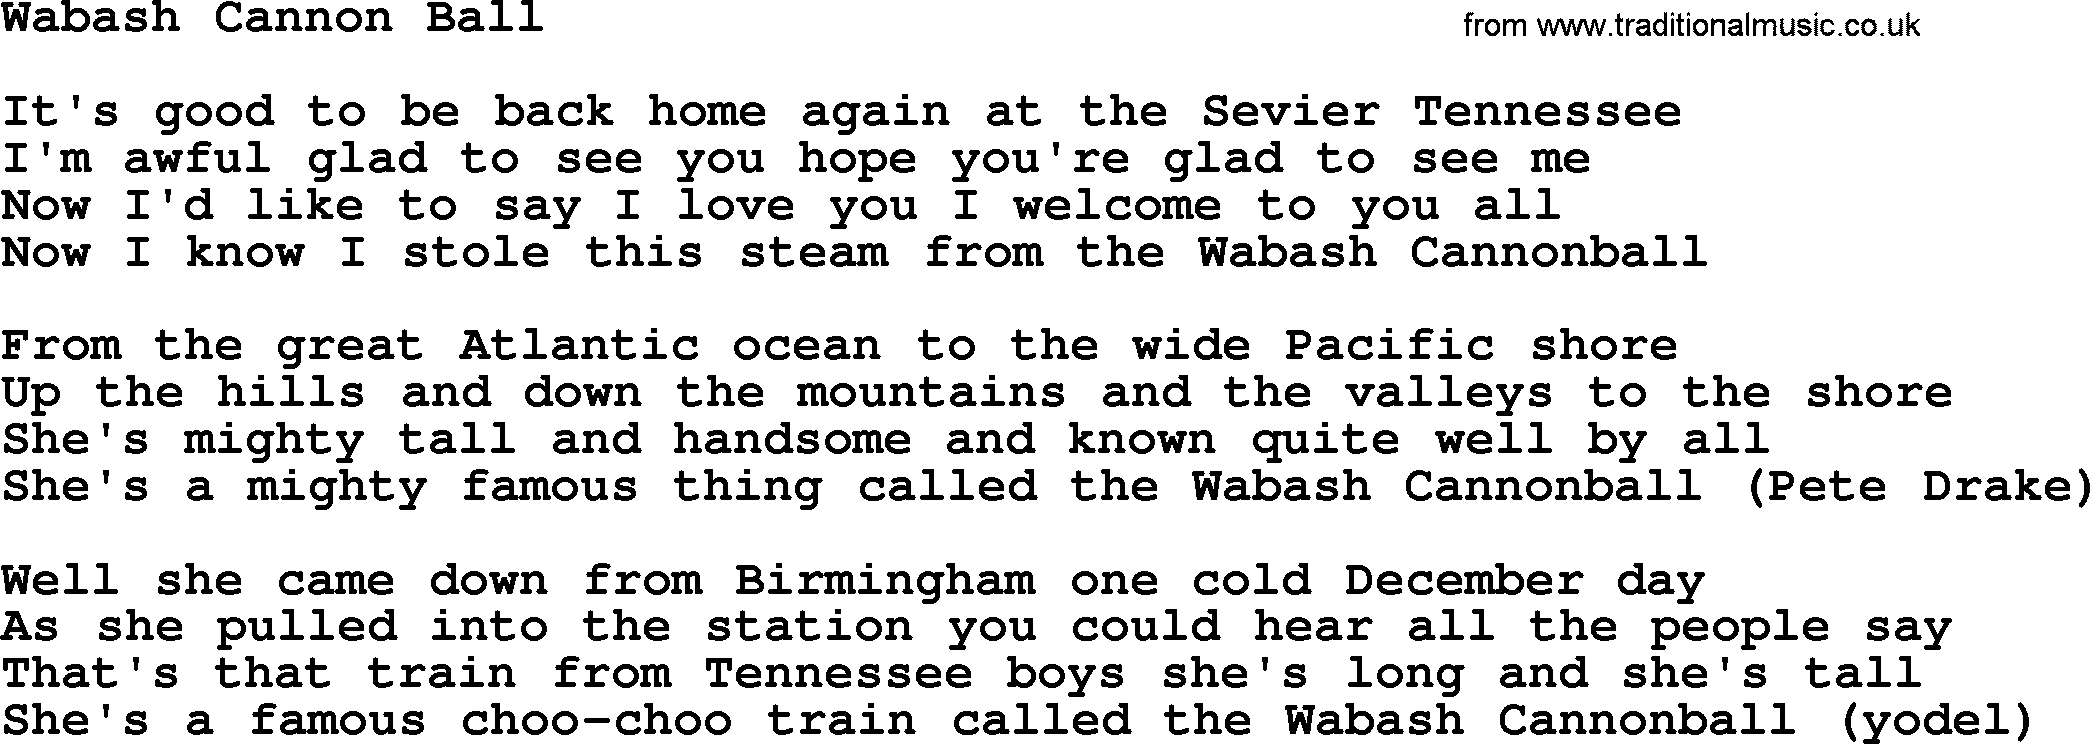 Dolly Parton song Wabash Cannon Ball.txt lyrics